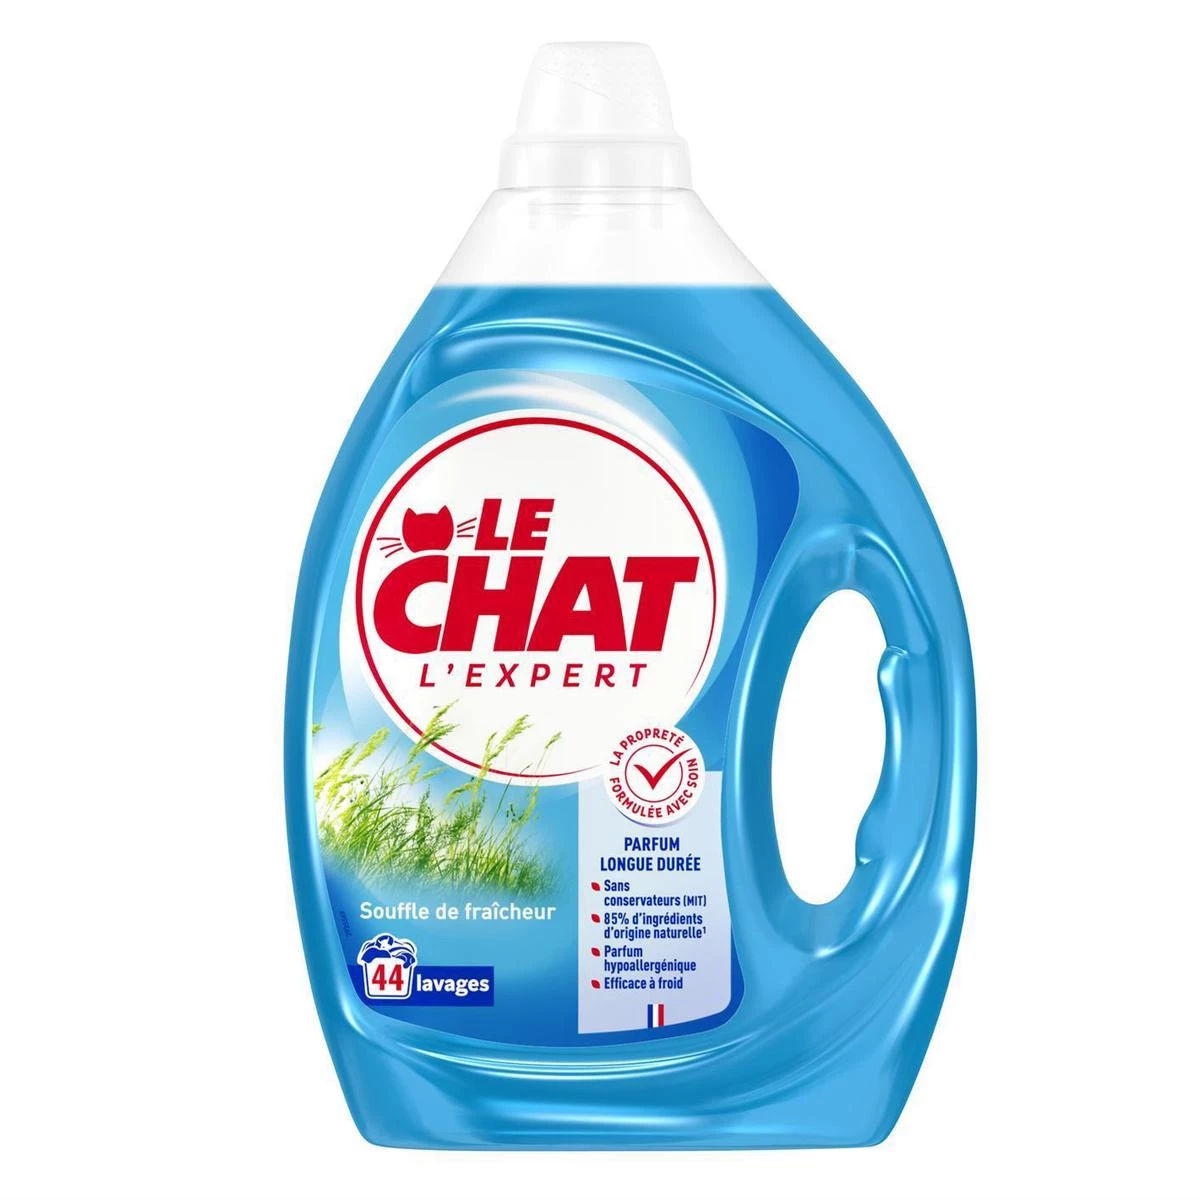 Nước Giặt L'expert Breath of Freshness Liquid 2.2l - Le Chat